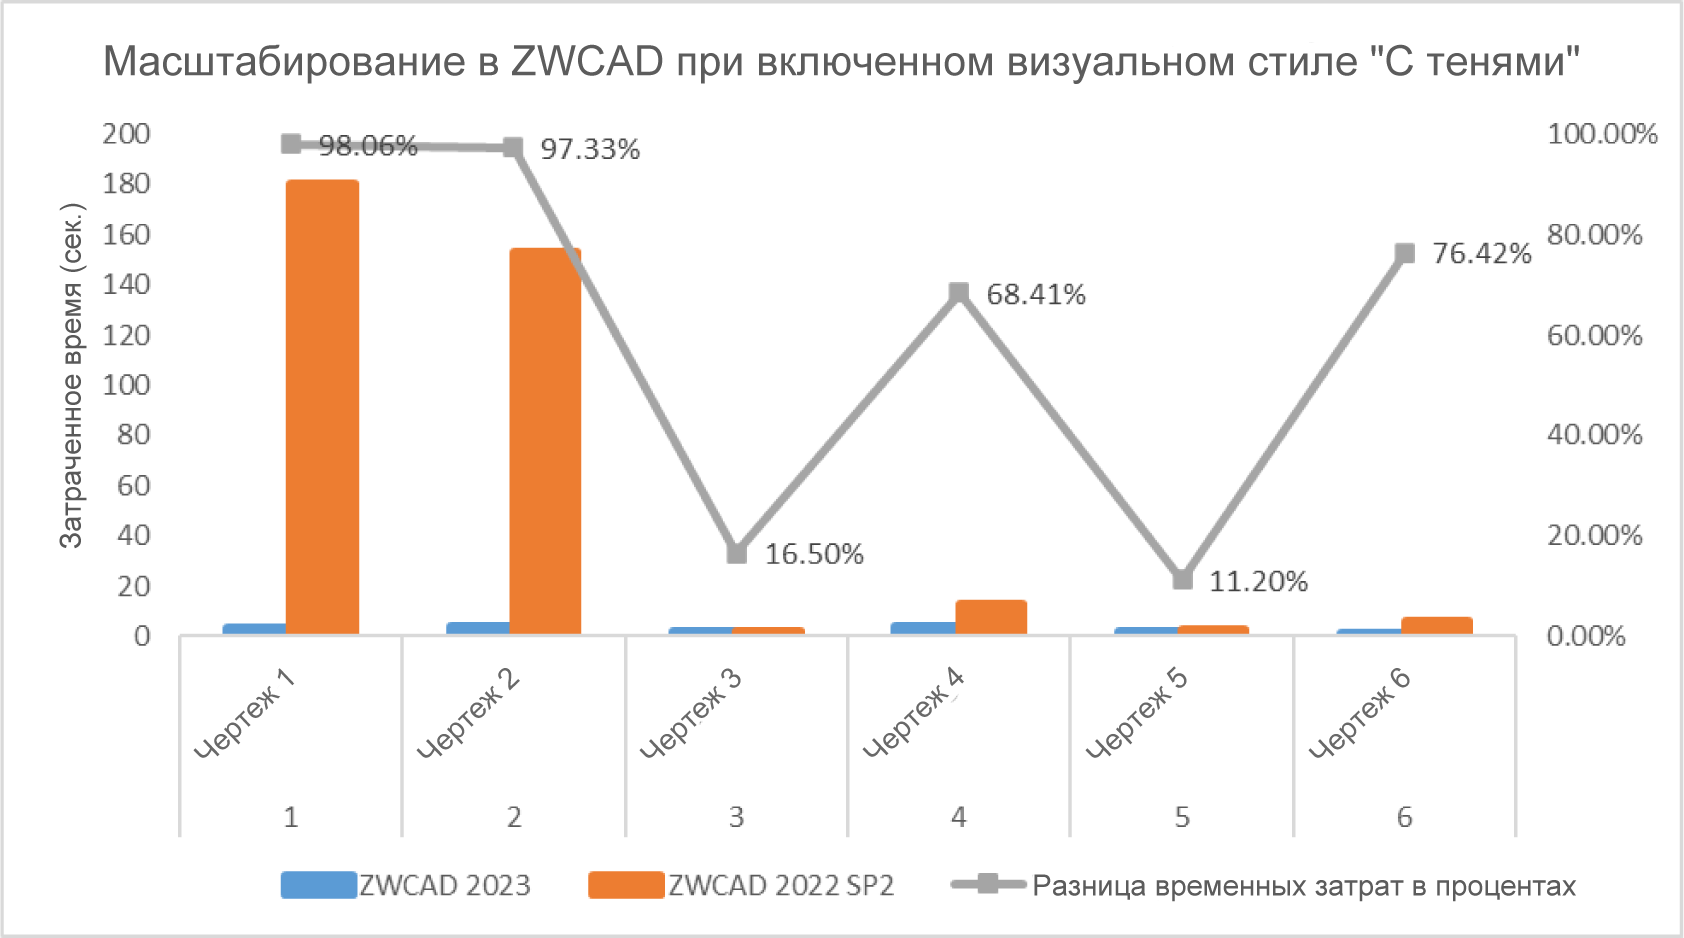 Cравнение эффективности ZWCAD 2022 и ZWCAD 2023